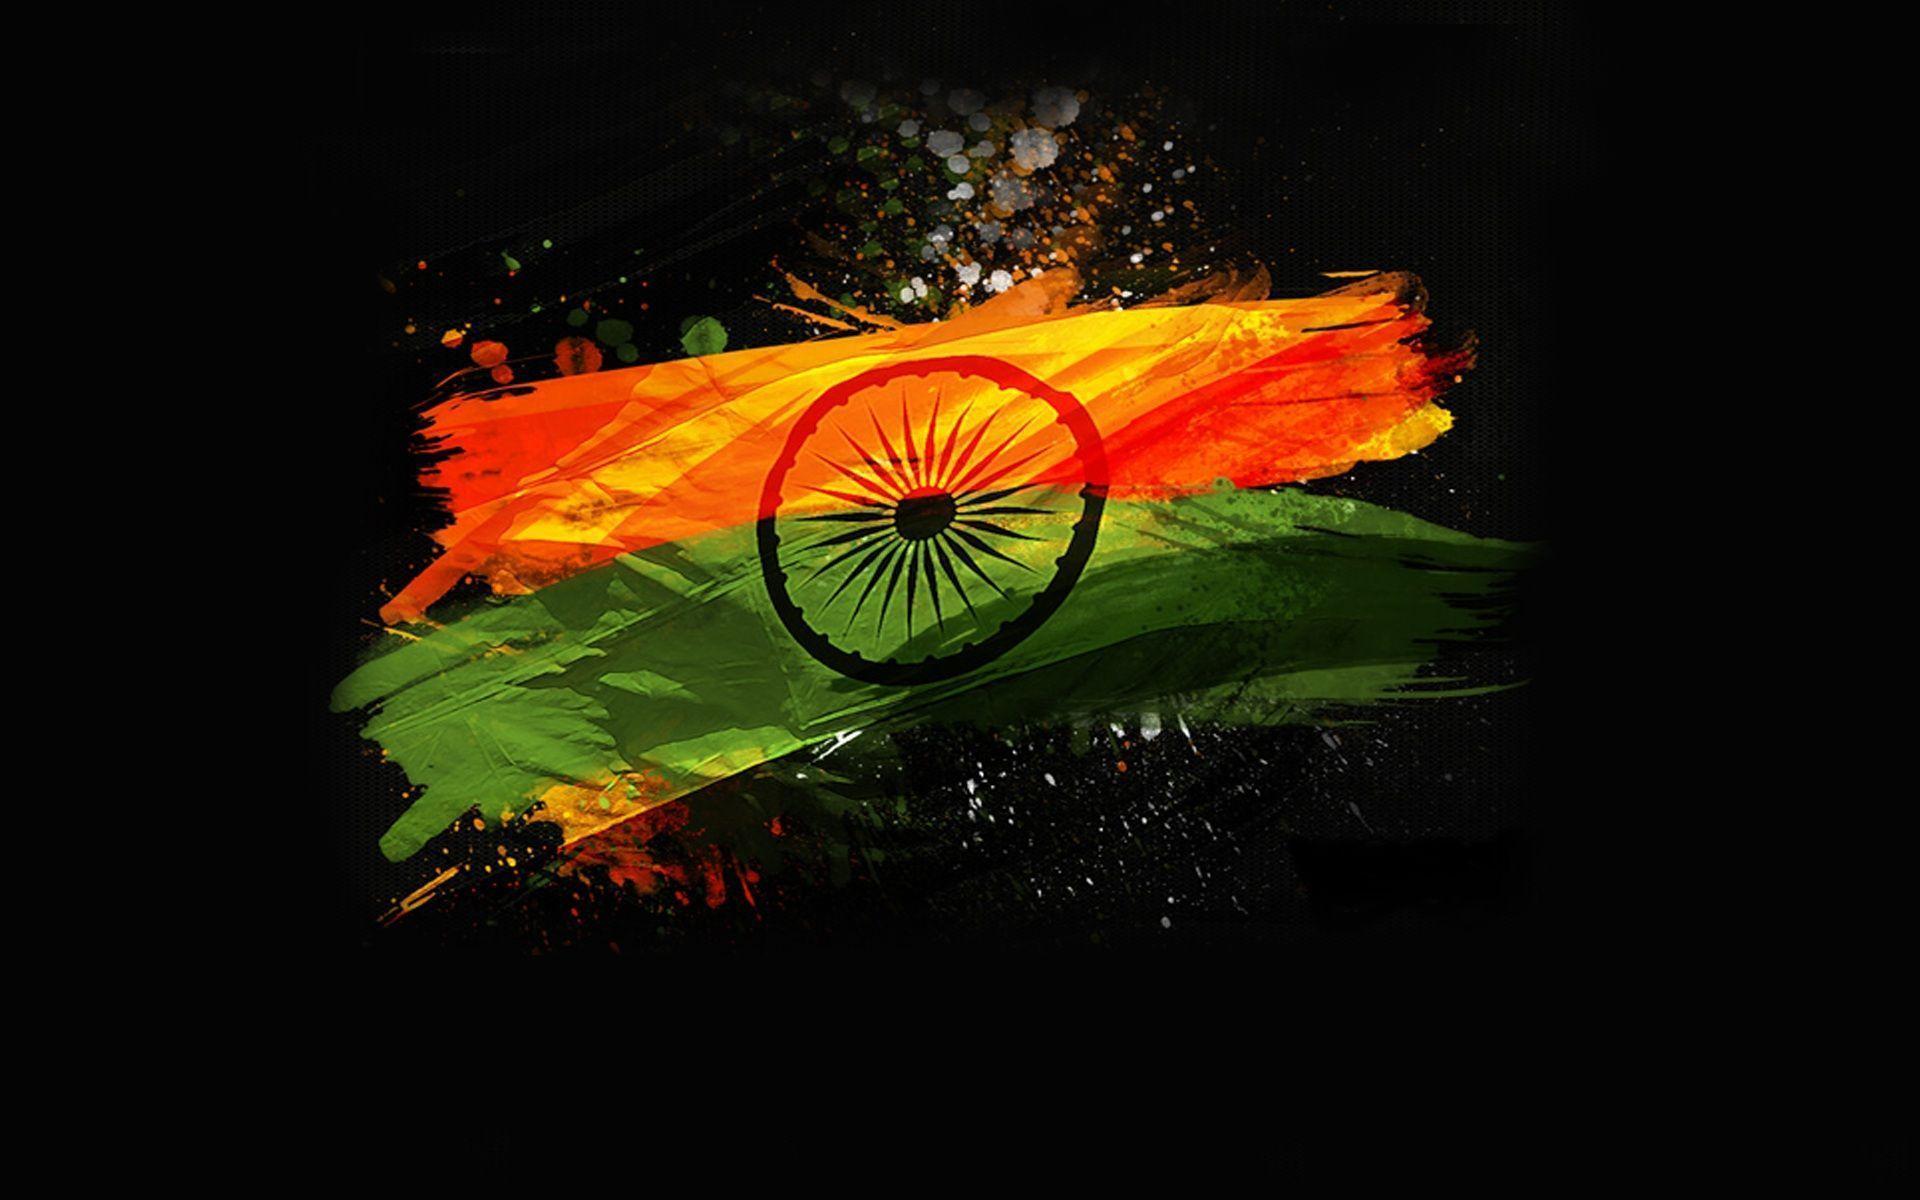 Indian Flag Mobile Wallpaper 2015